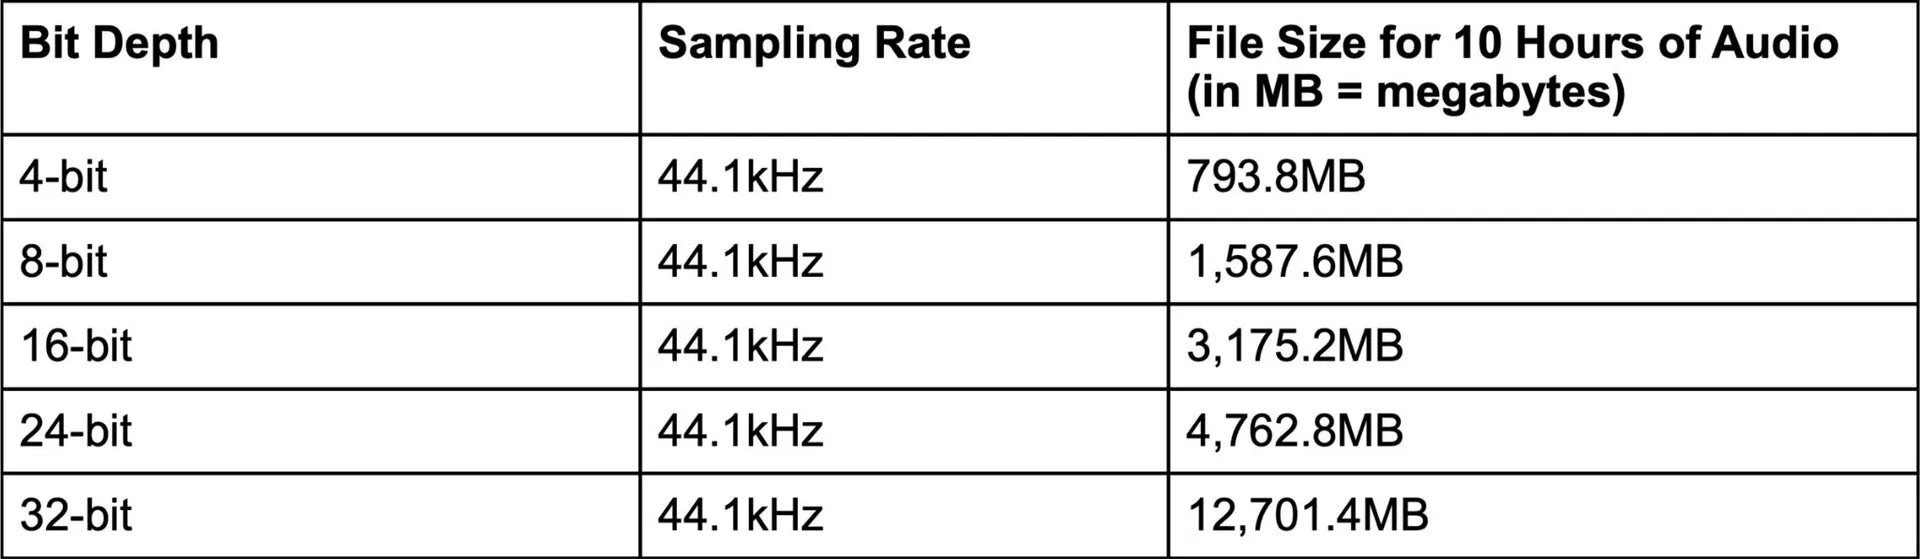 Audio bit depth file size per 60 mins of audio comparison